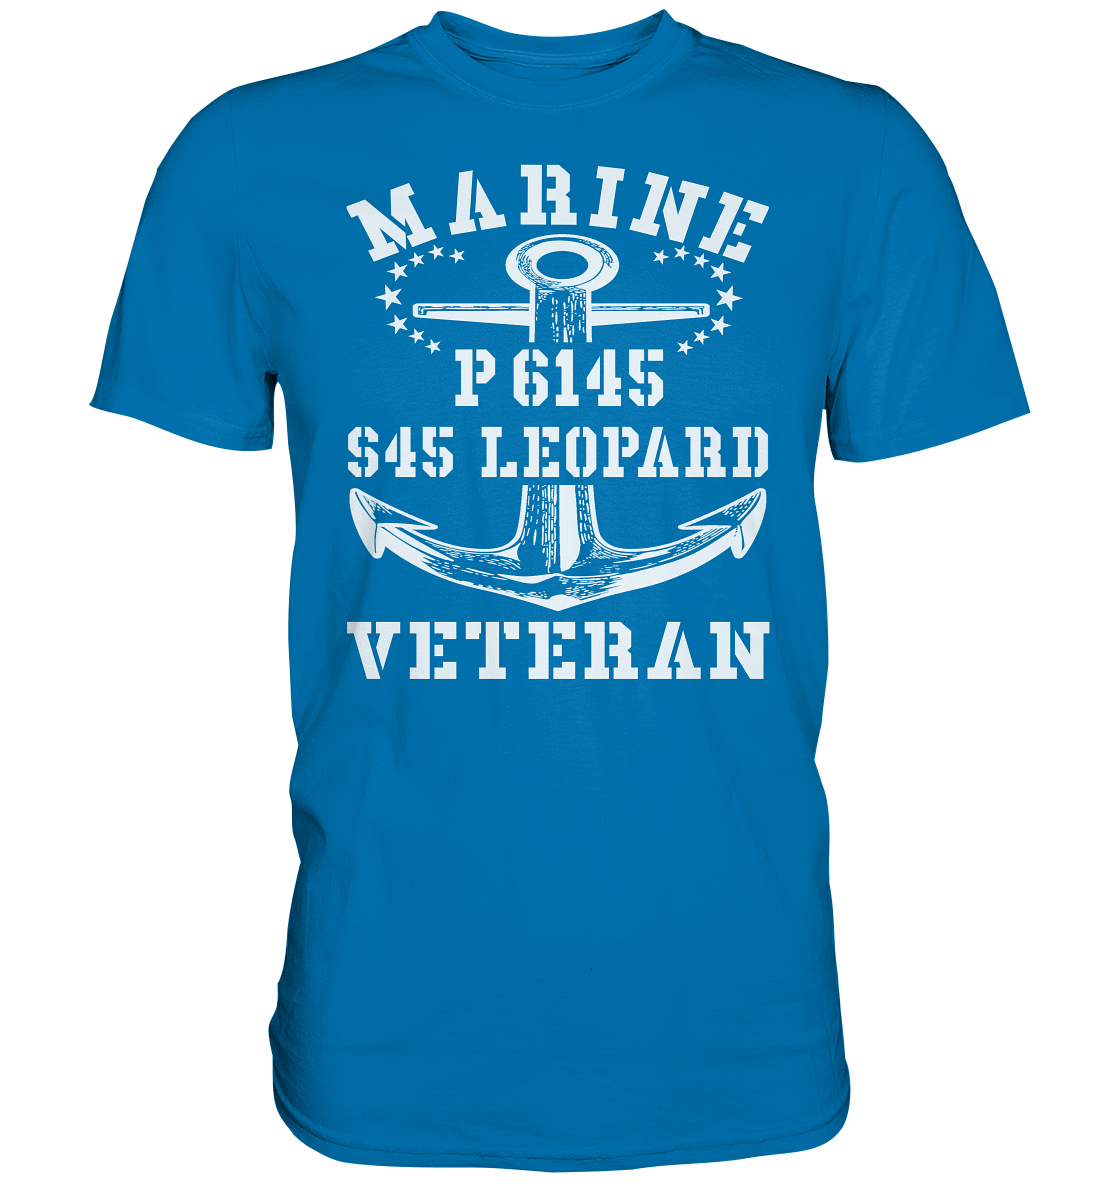 P6145 S45 LEOPARD Marine Veteran - Premium Shirt